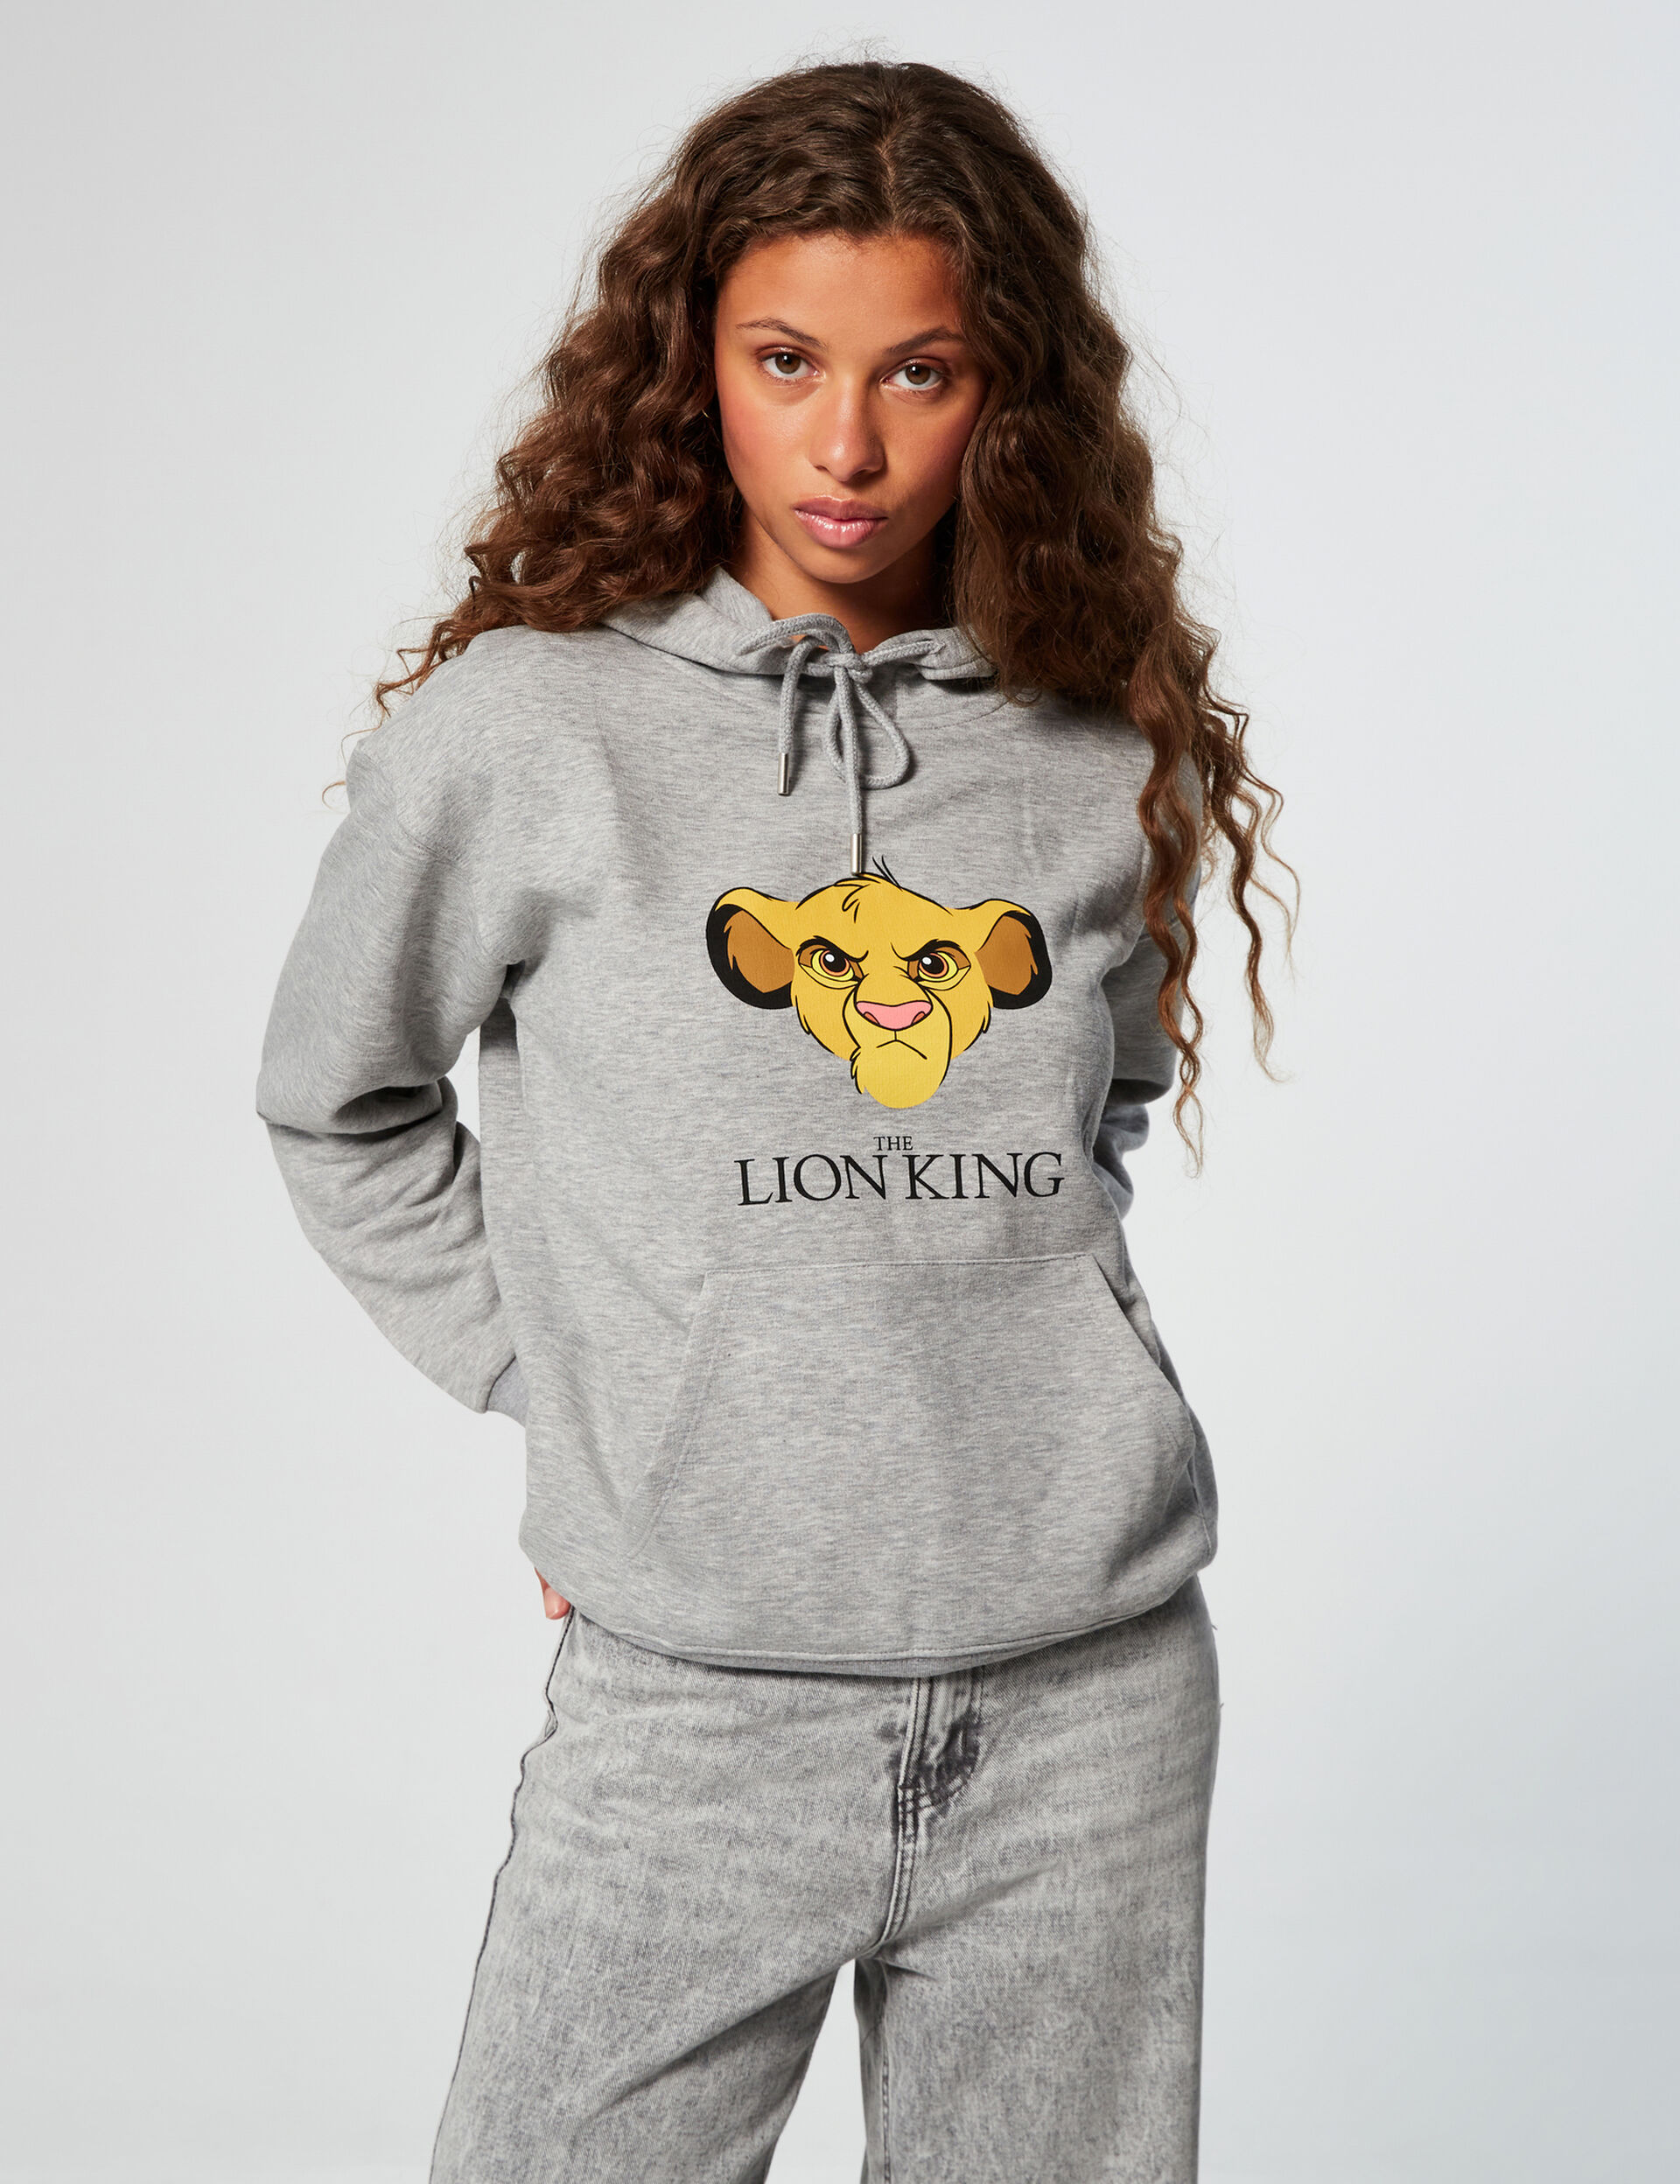 Lion King hoodie